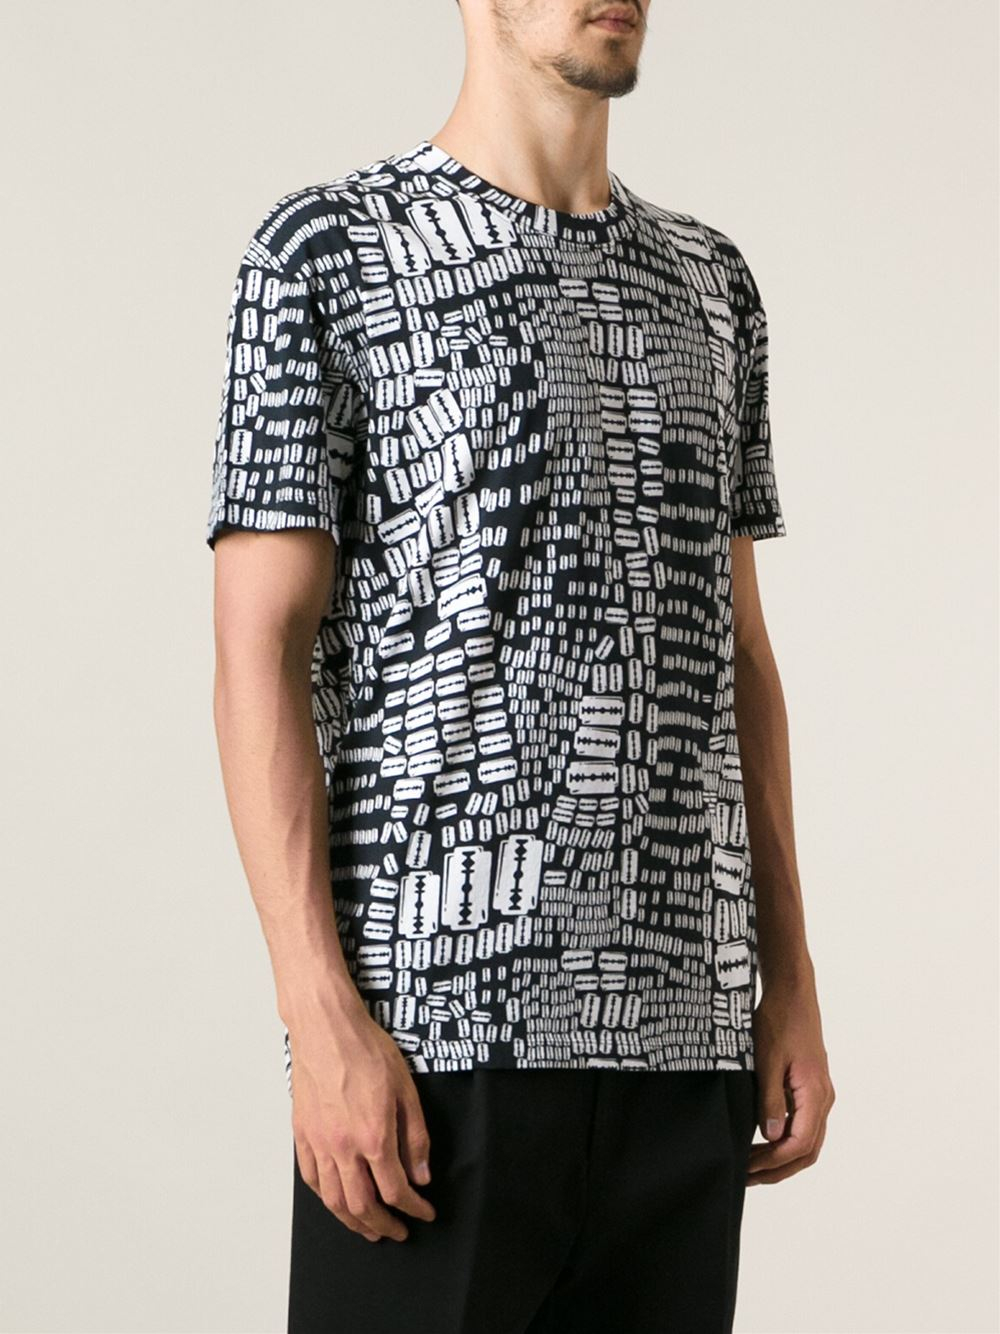 Lyst - Mcq Razor Blade Print T-Shirt in Black for Men